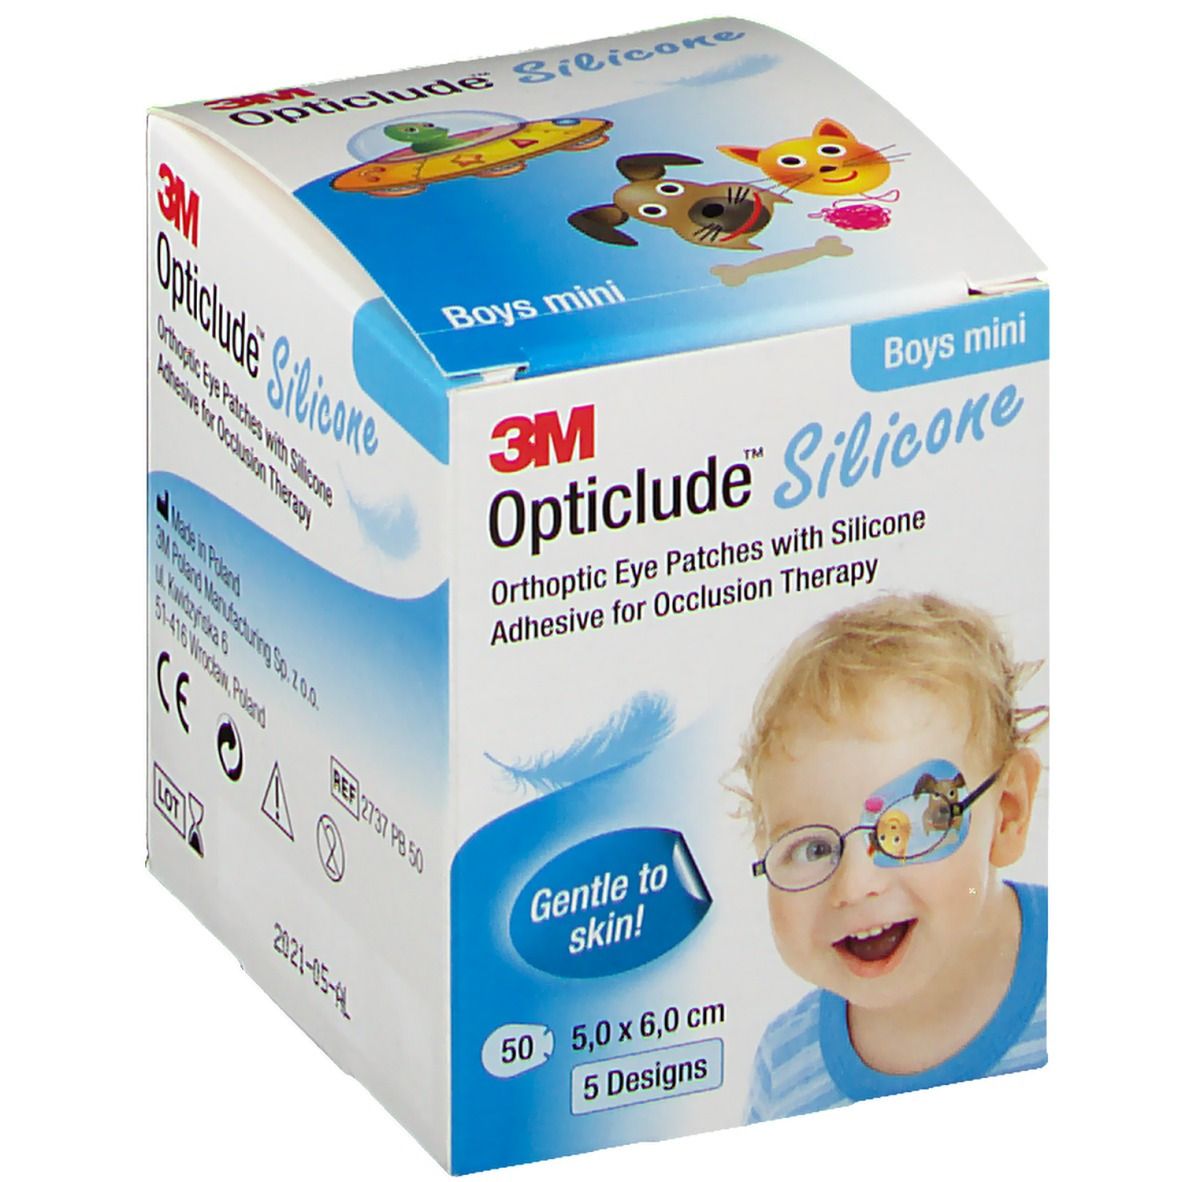 Opticlude 3M Silicone Boys mini 5,6 x 6 cm